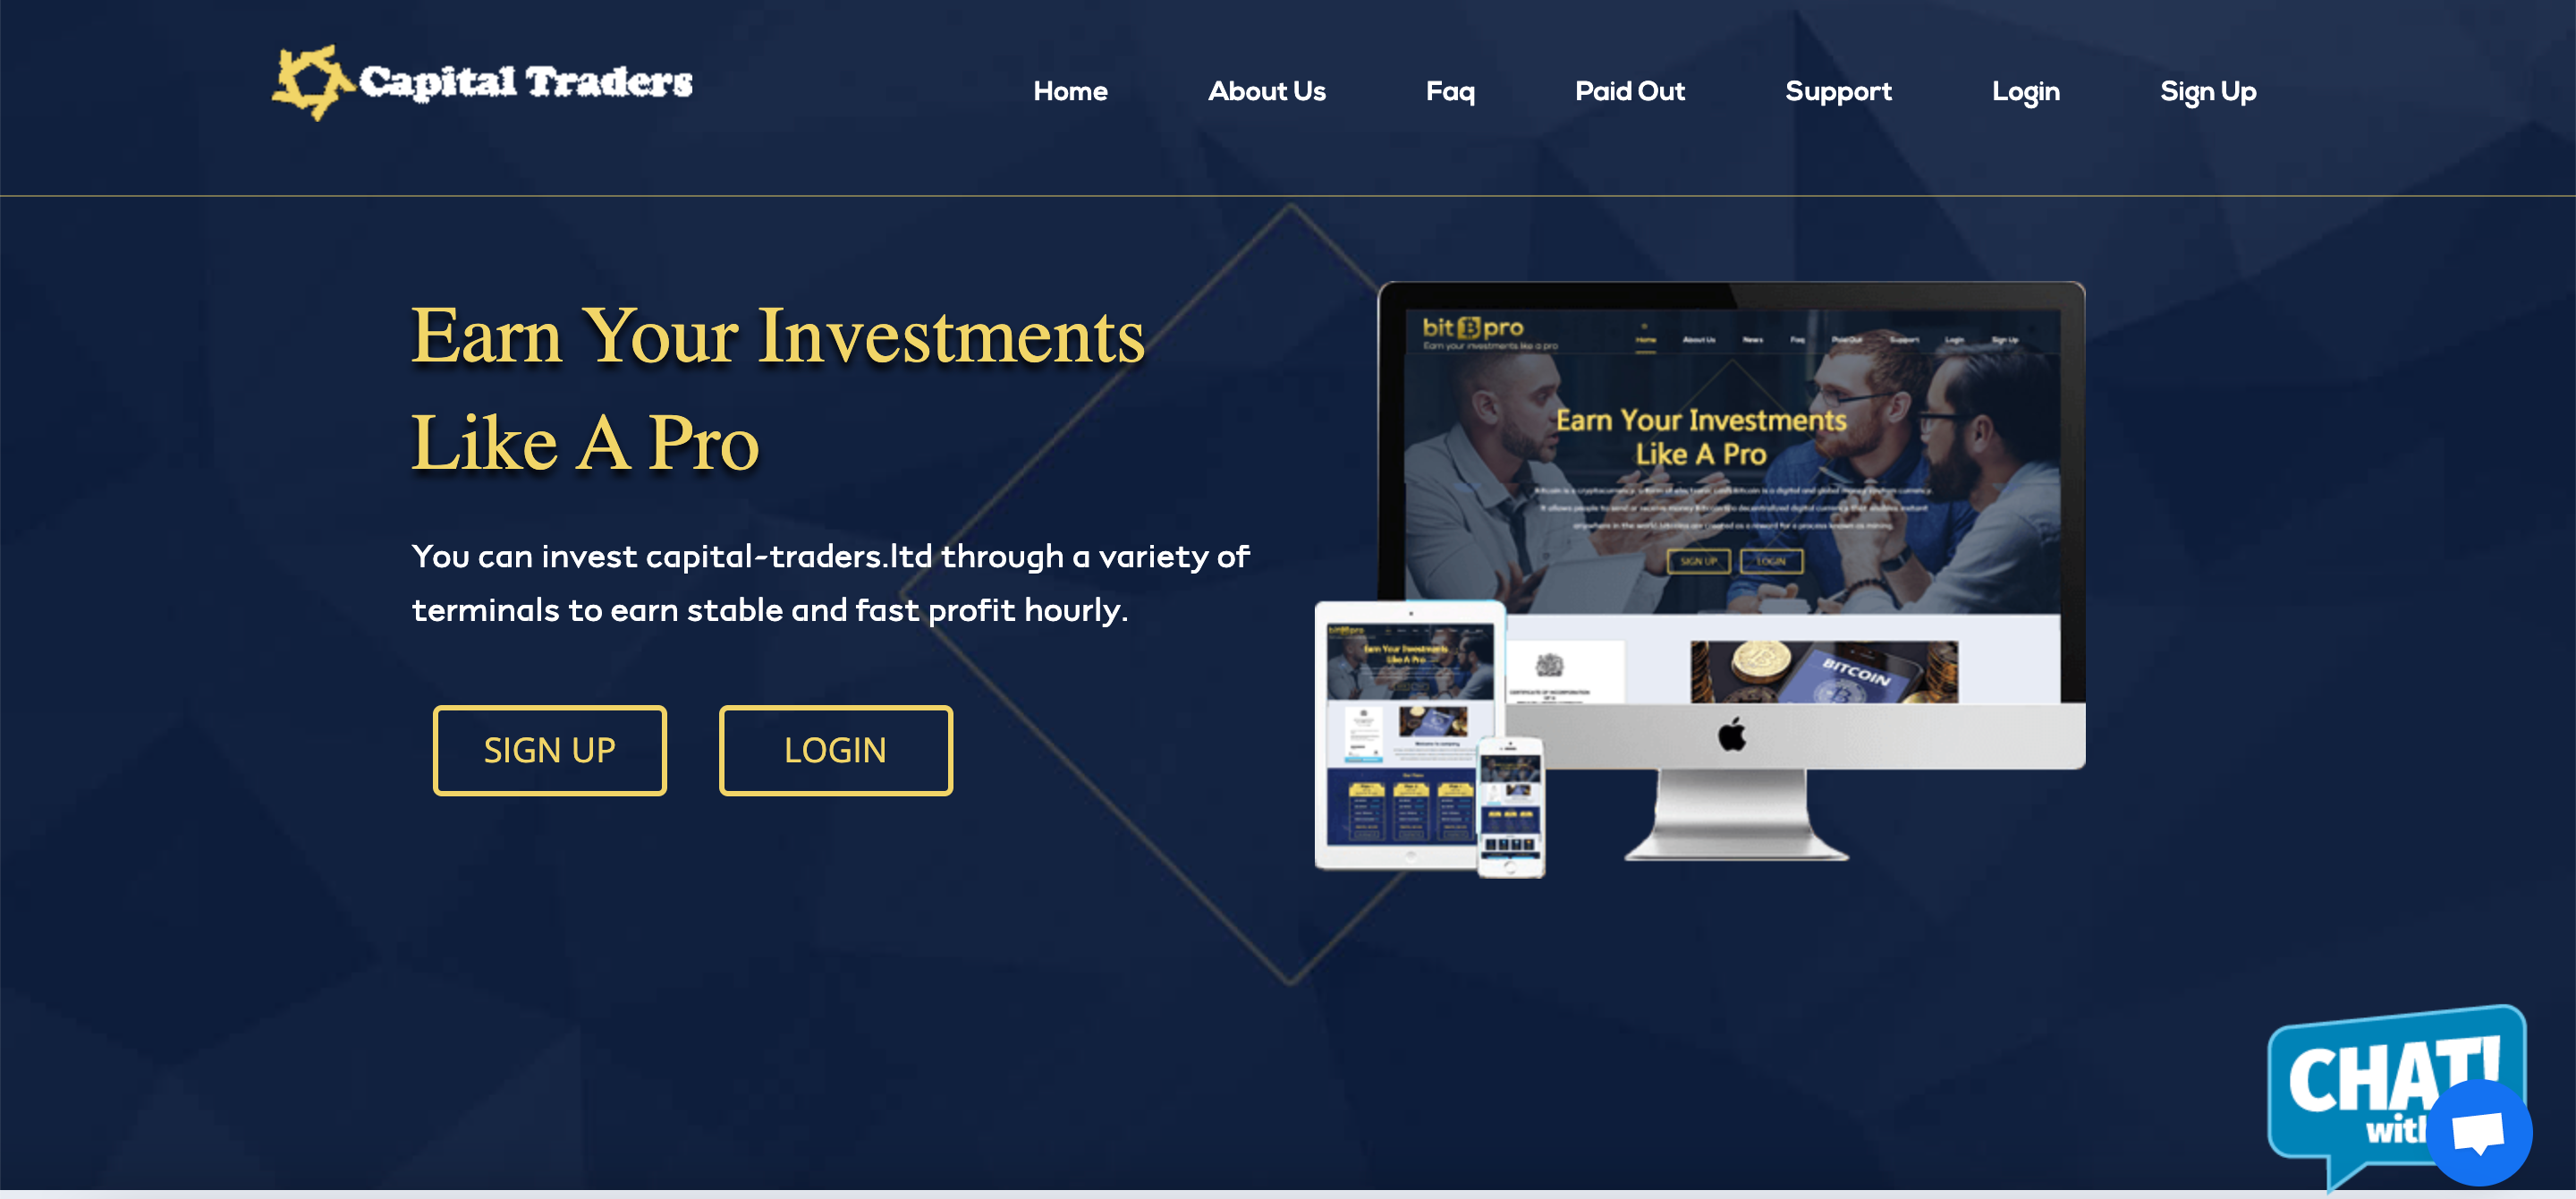 Capital Traders website